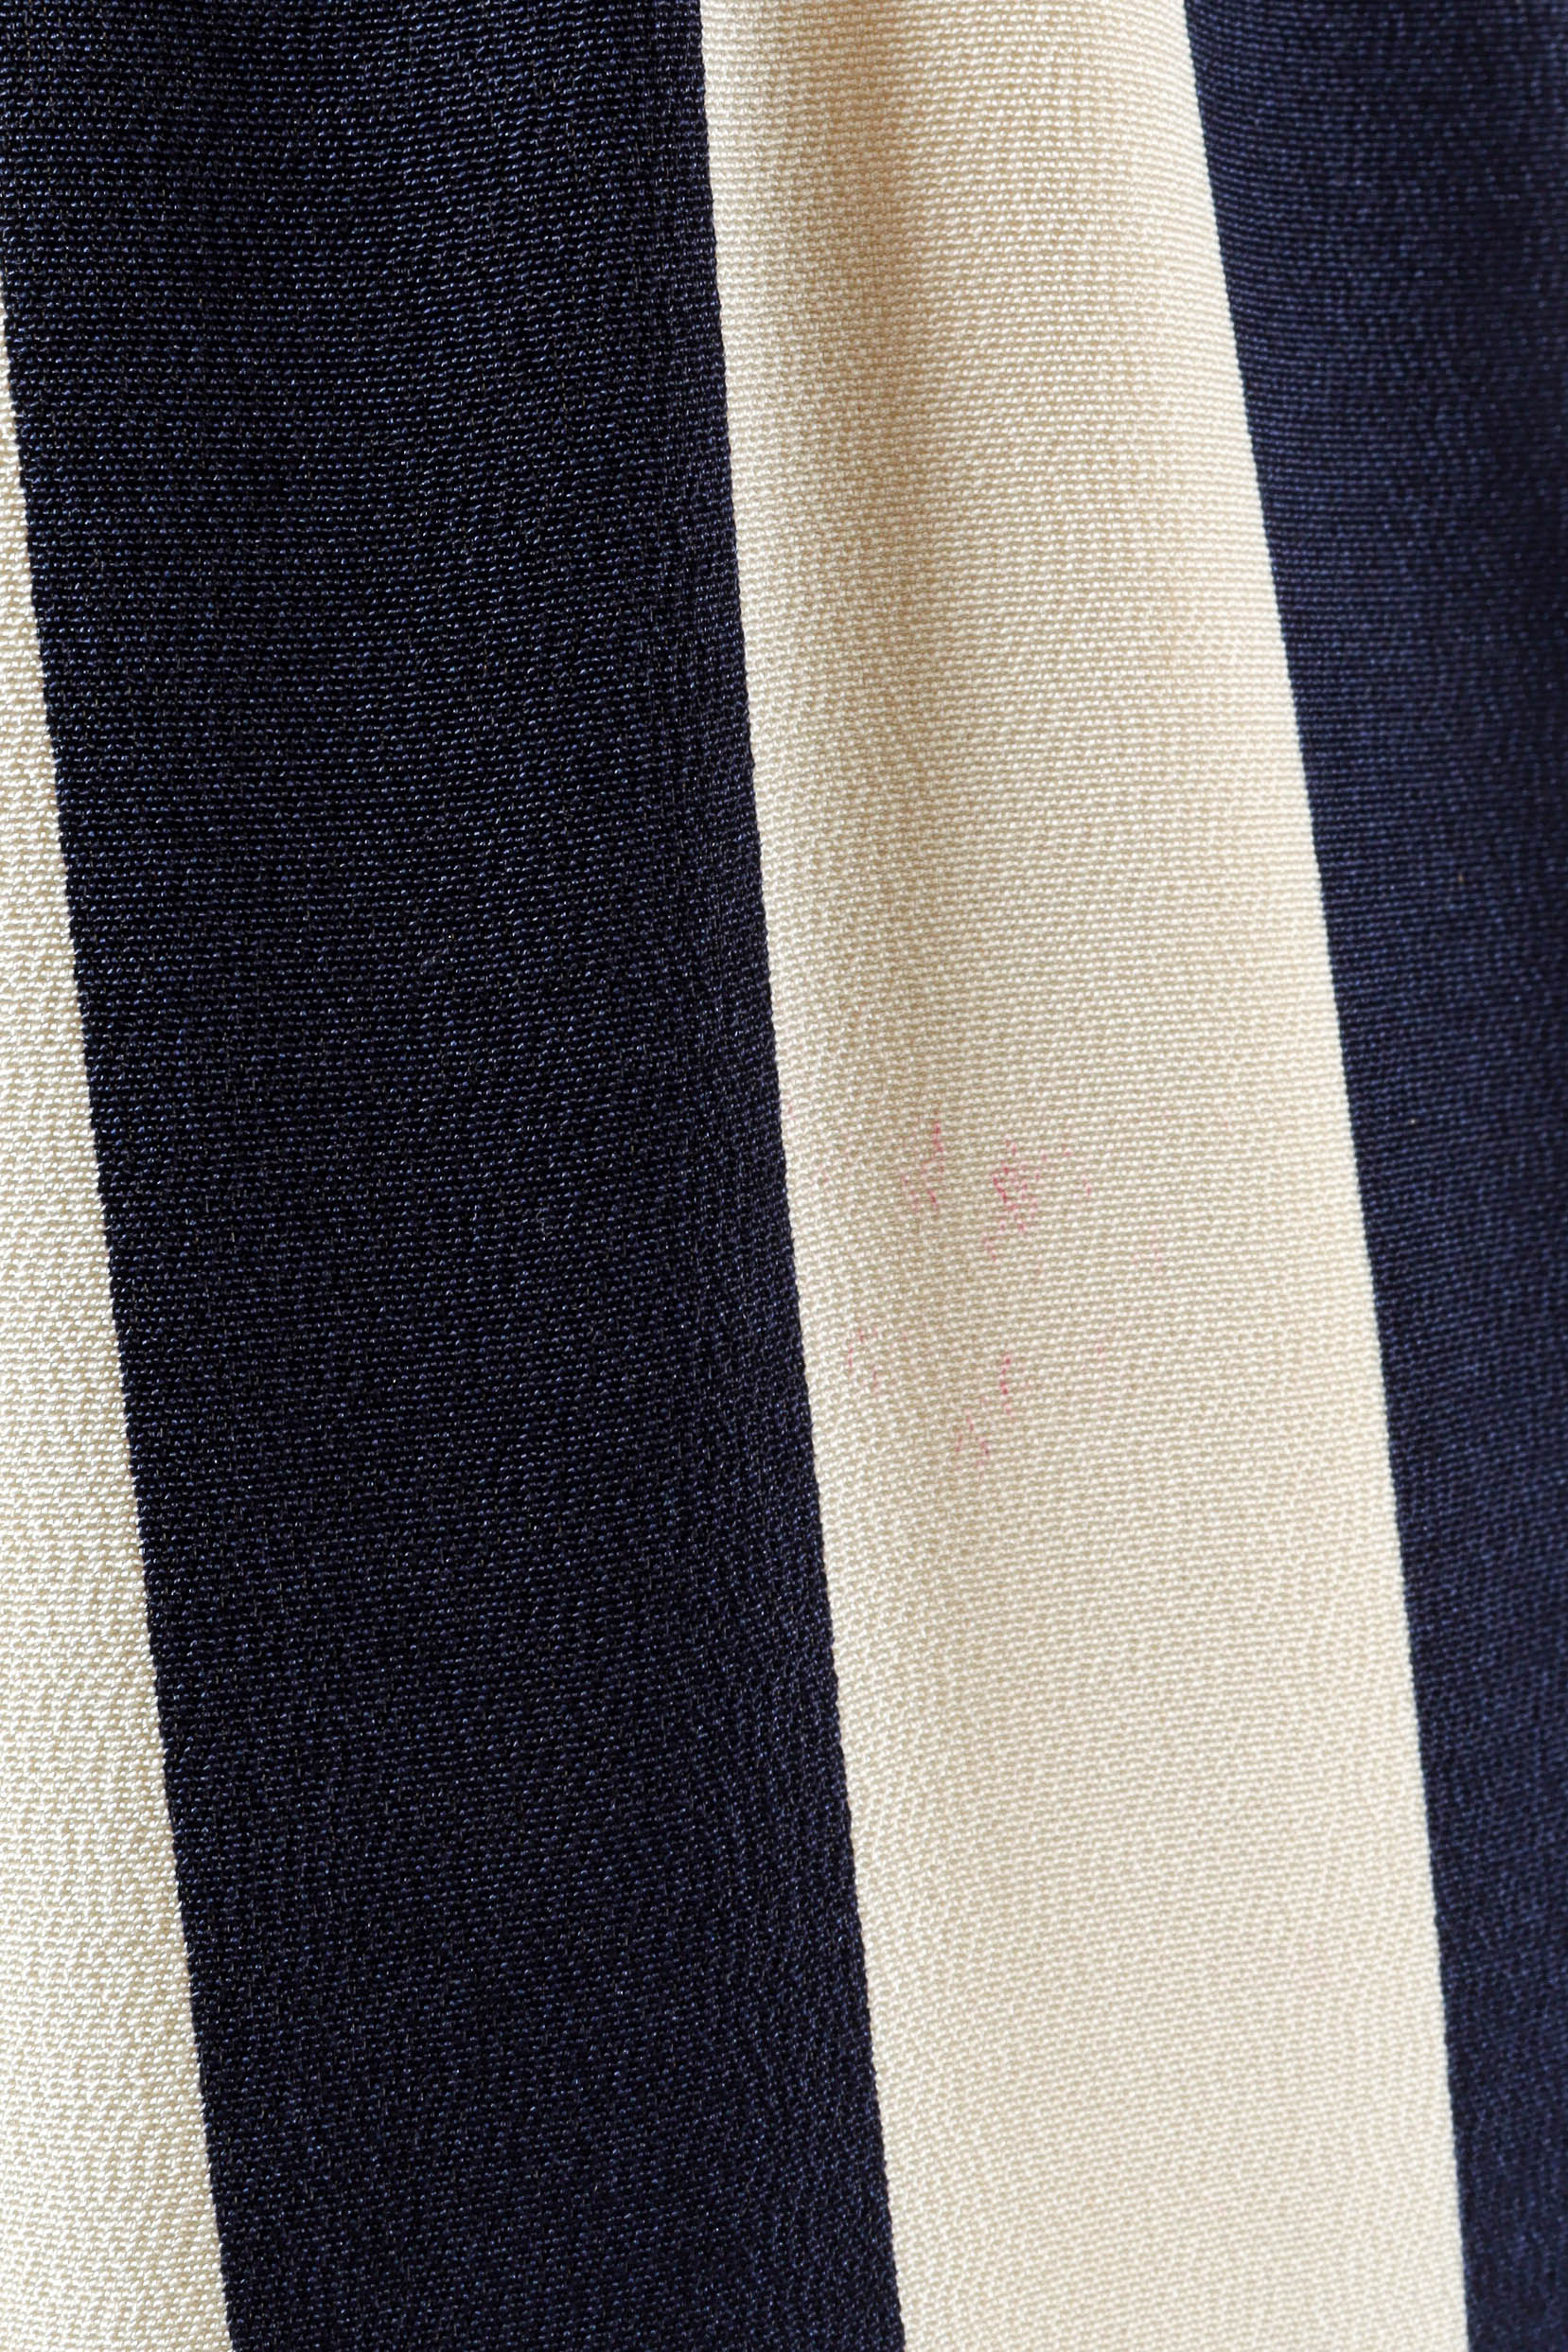 Vintage Hanae Mori Nautical Stripe Culotte light pink stain on L side by hip pocket@ Recess LA